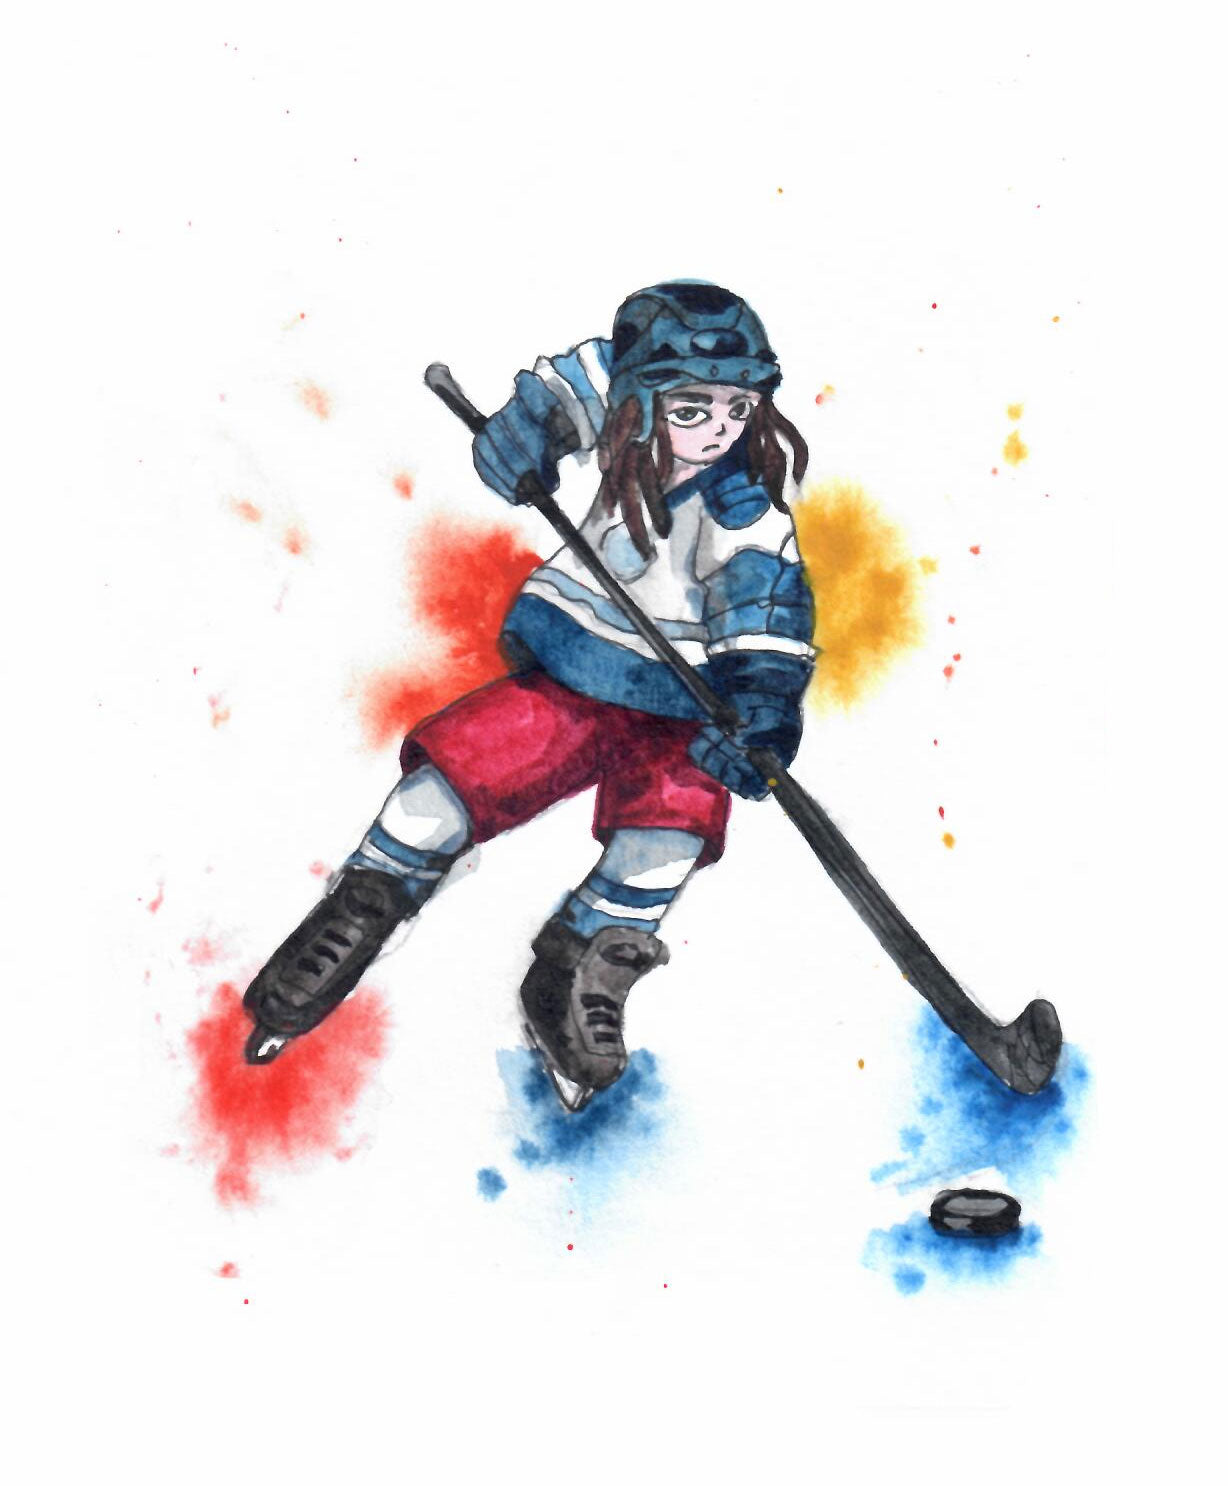 Hockey girl